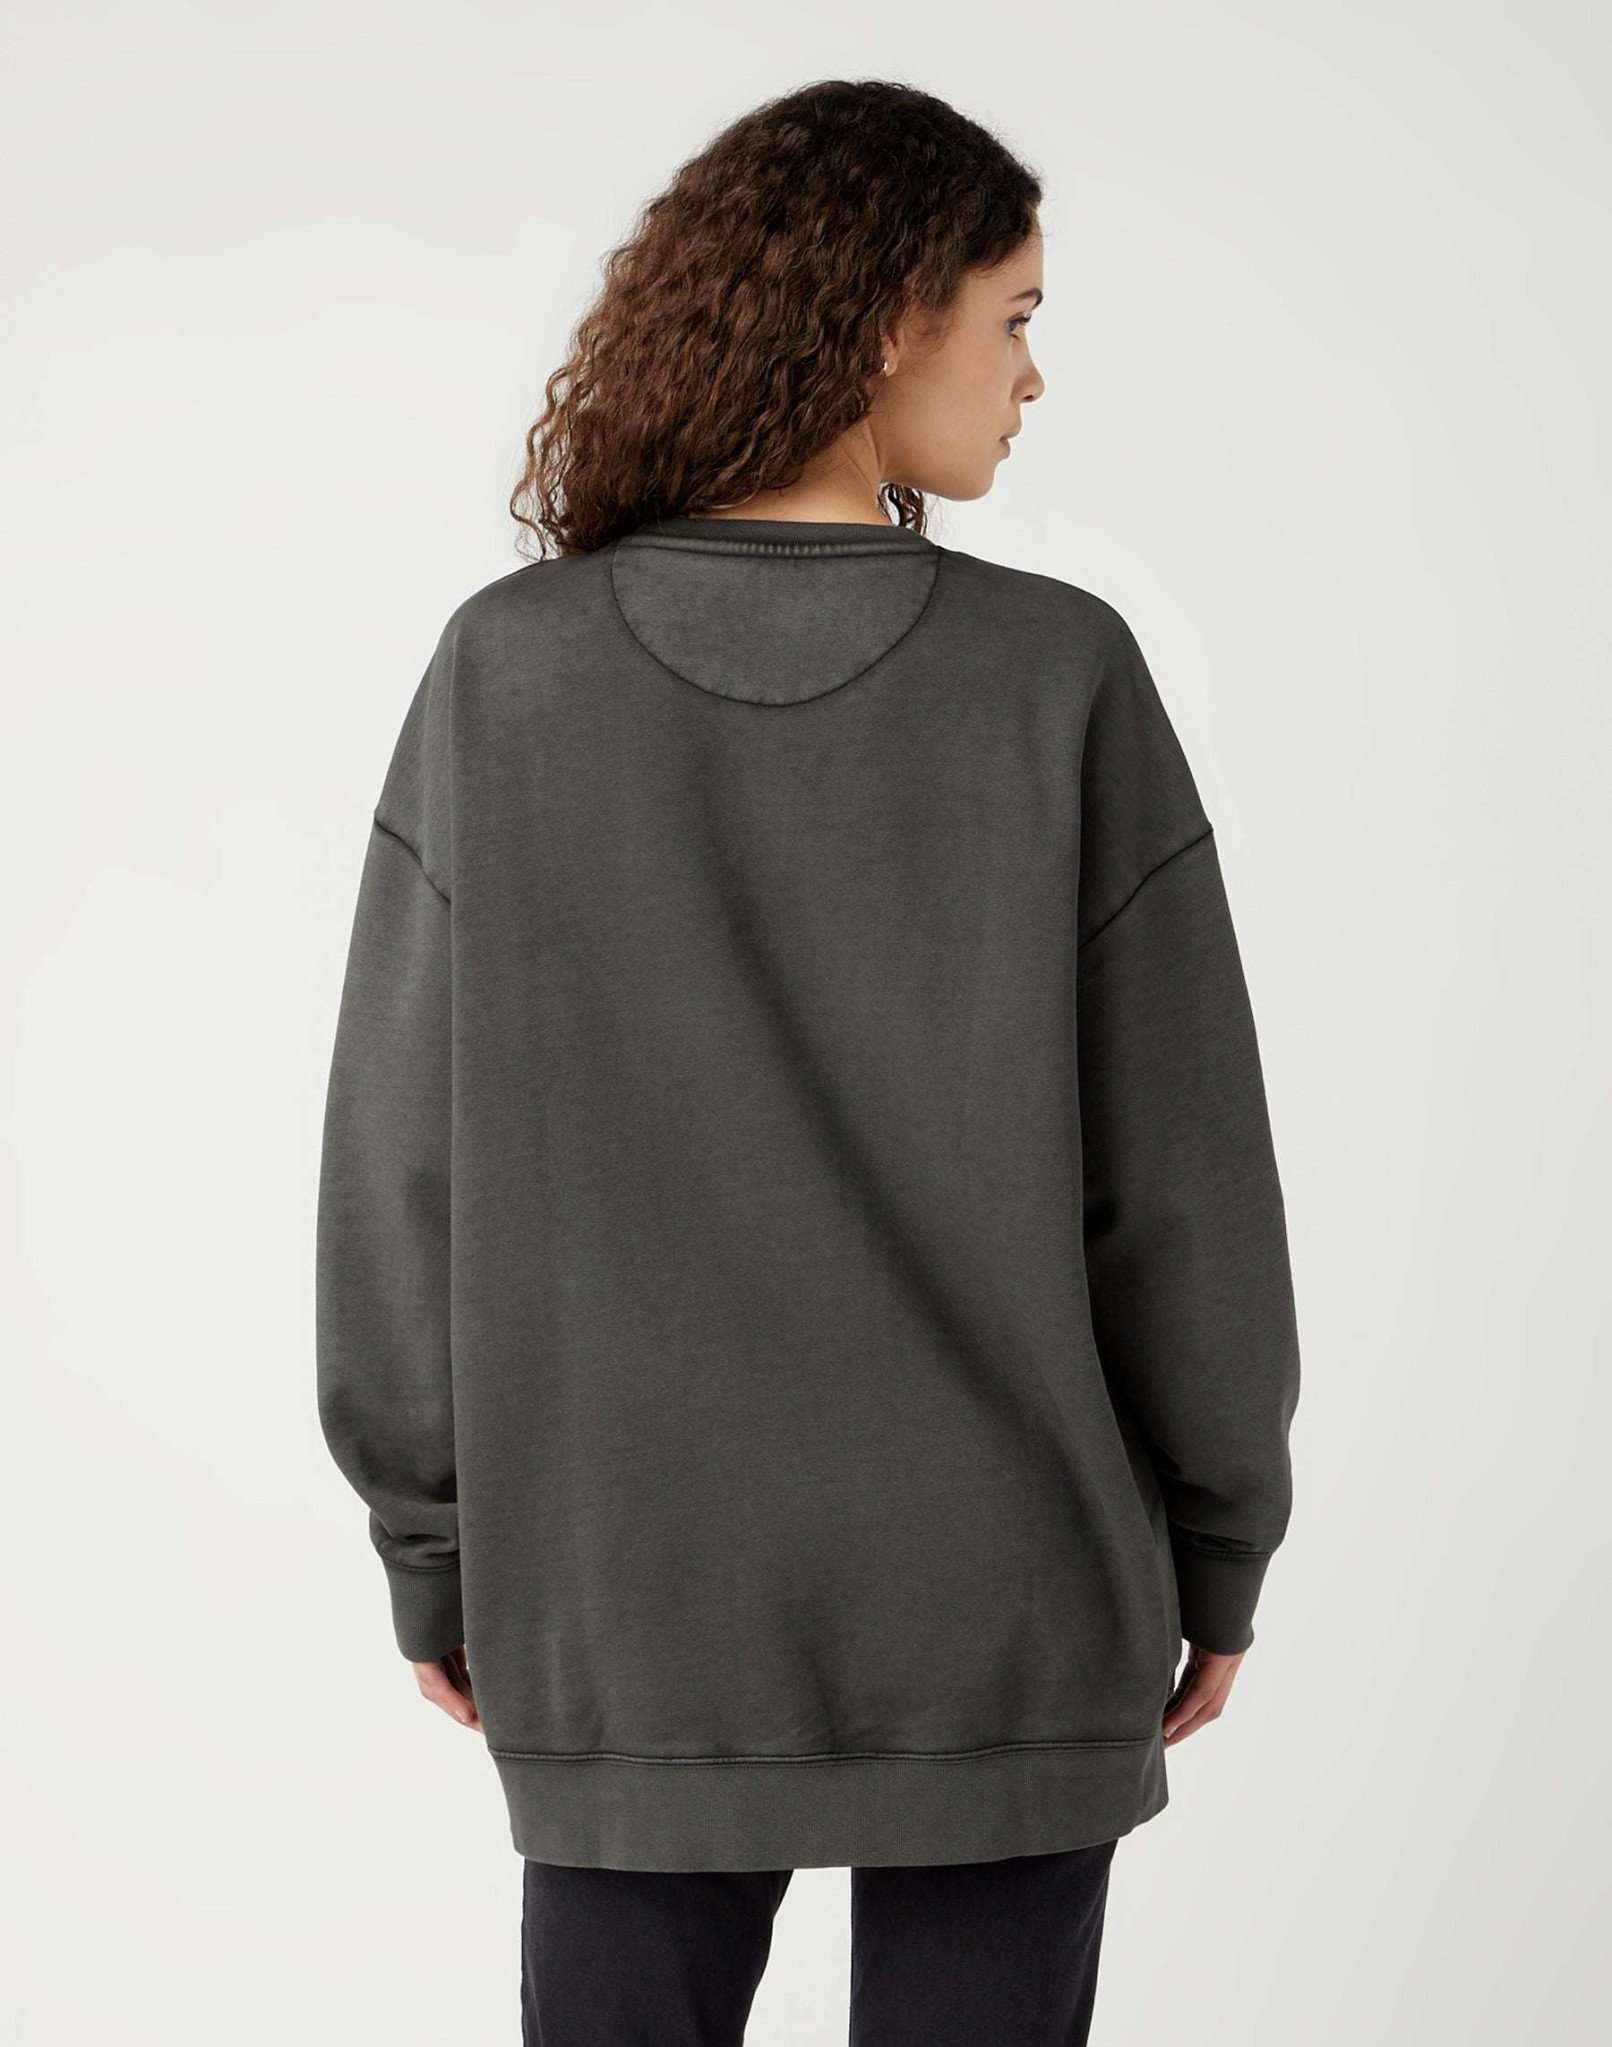 Retro Sweatshirt in Faded Black Sweatshirts Wrangler   